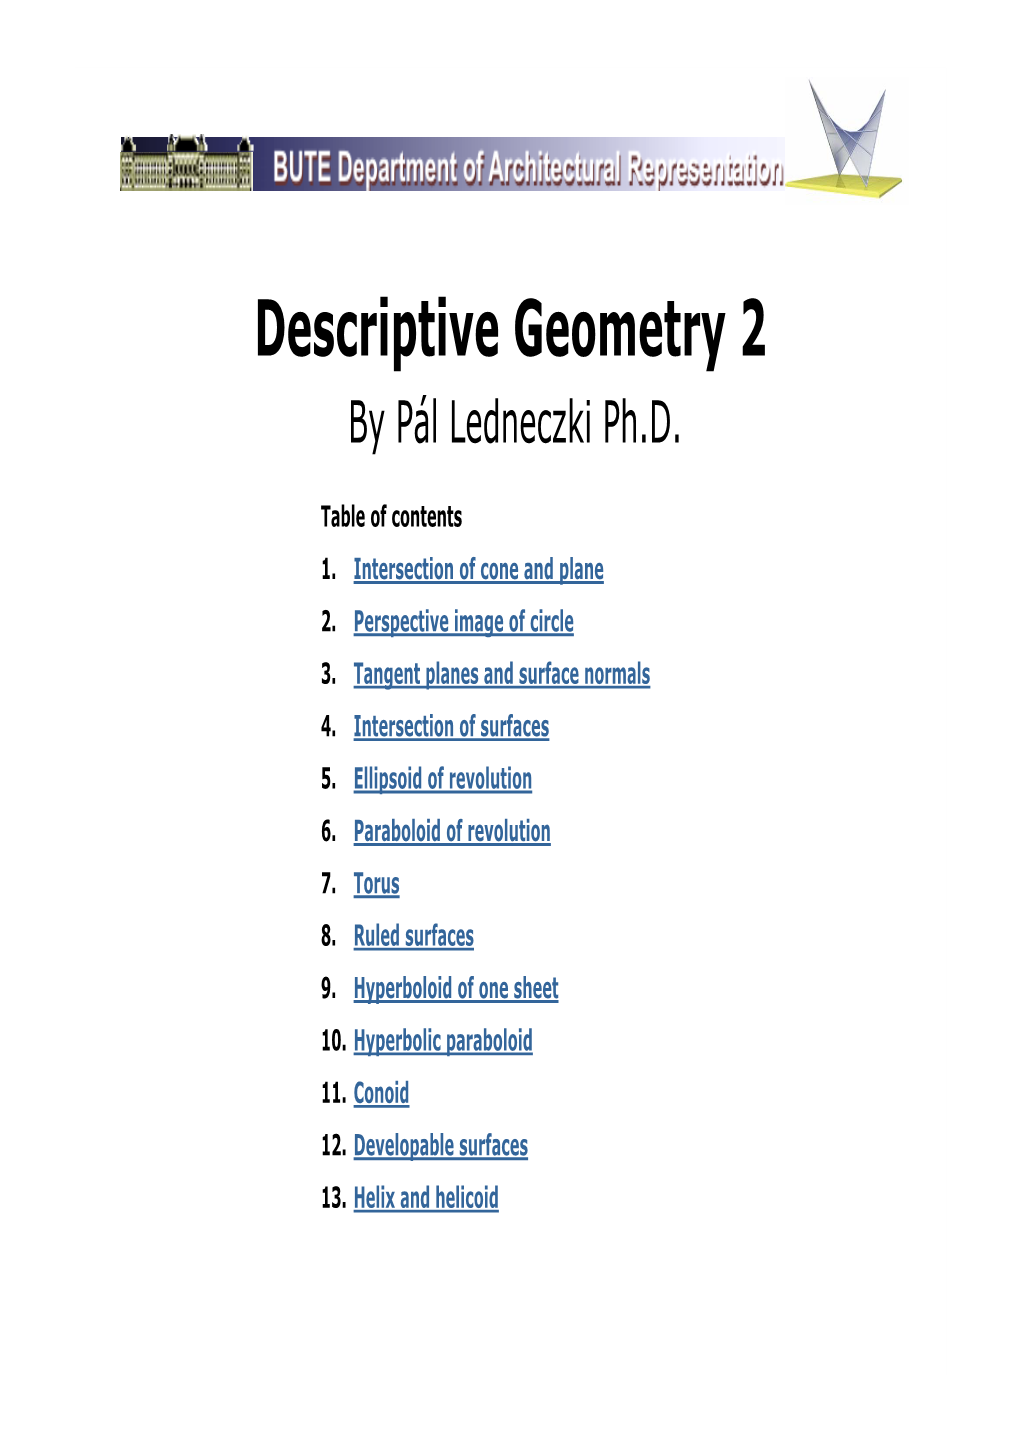 Descriptive Geometry 2 by Pál Ledneczki Ph.D